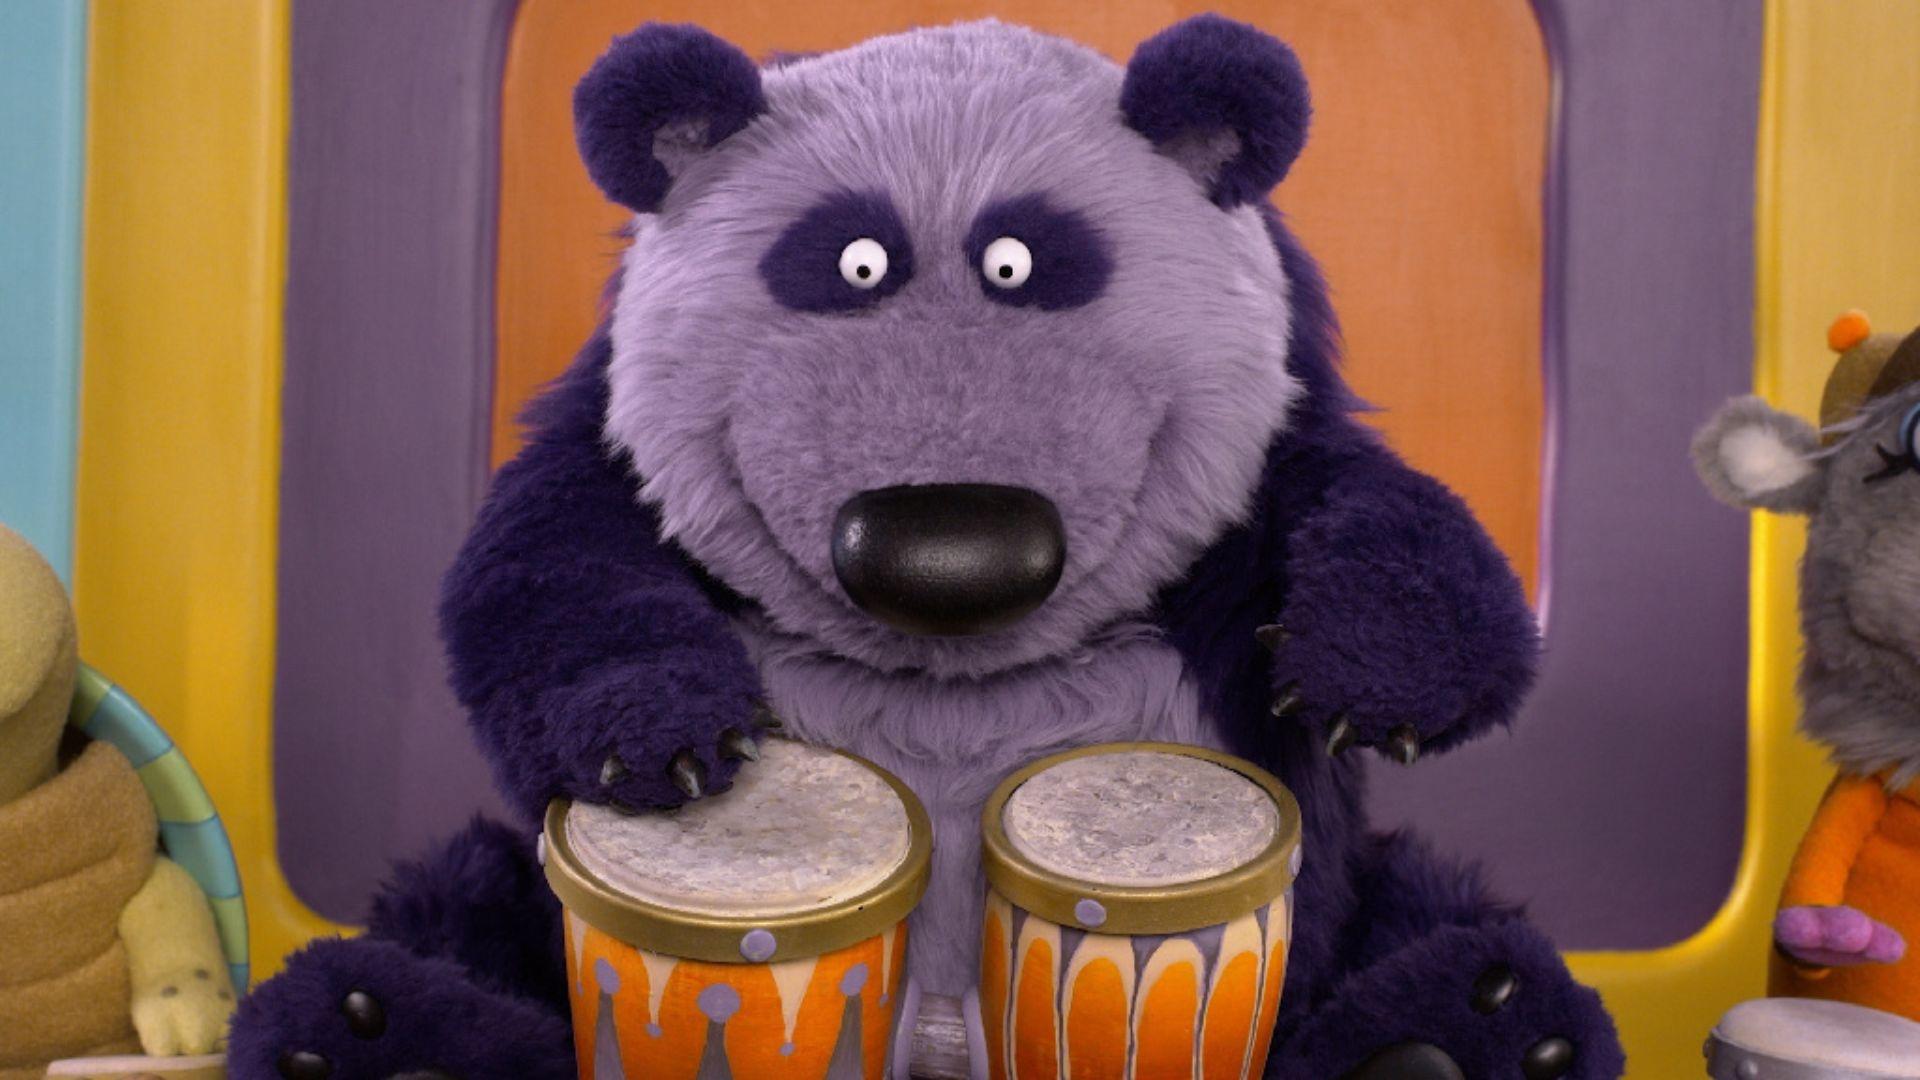 Purple Panda plays the bongos in Donkey Hodie.